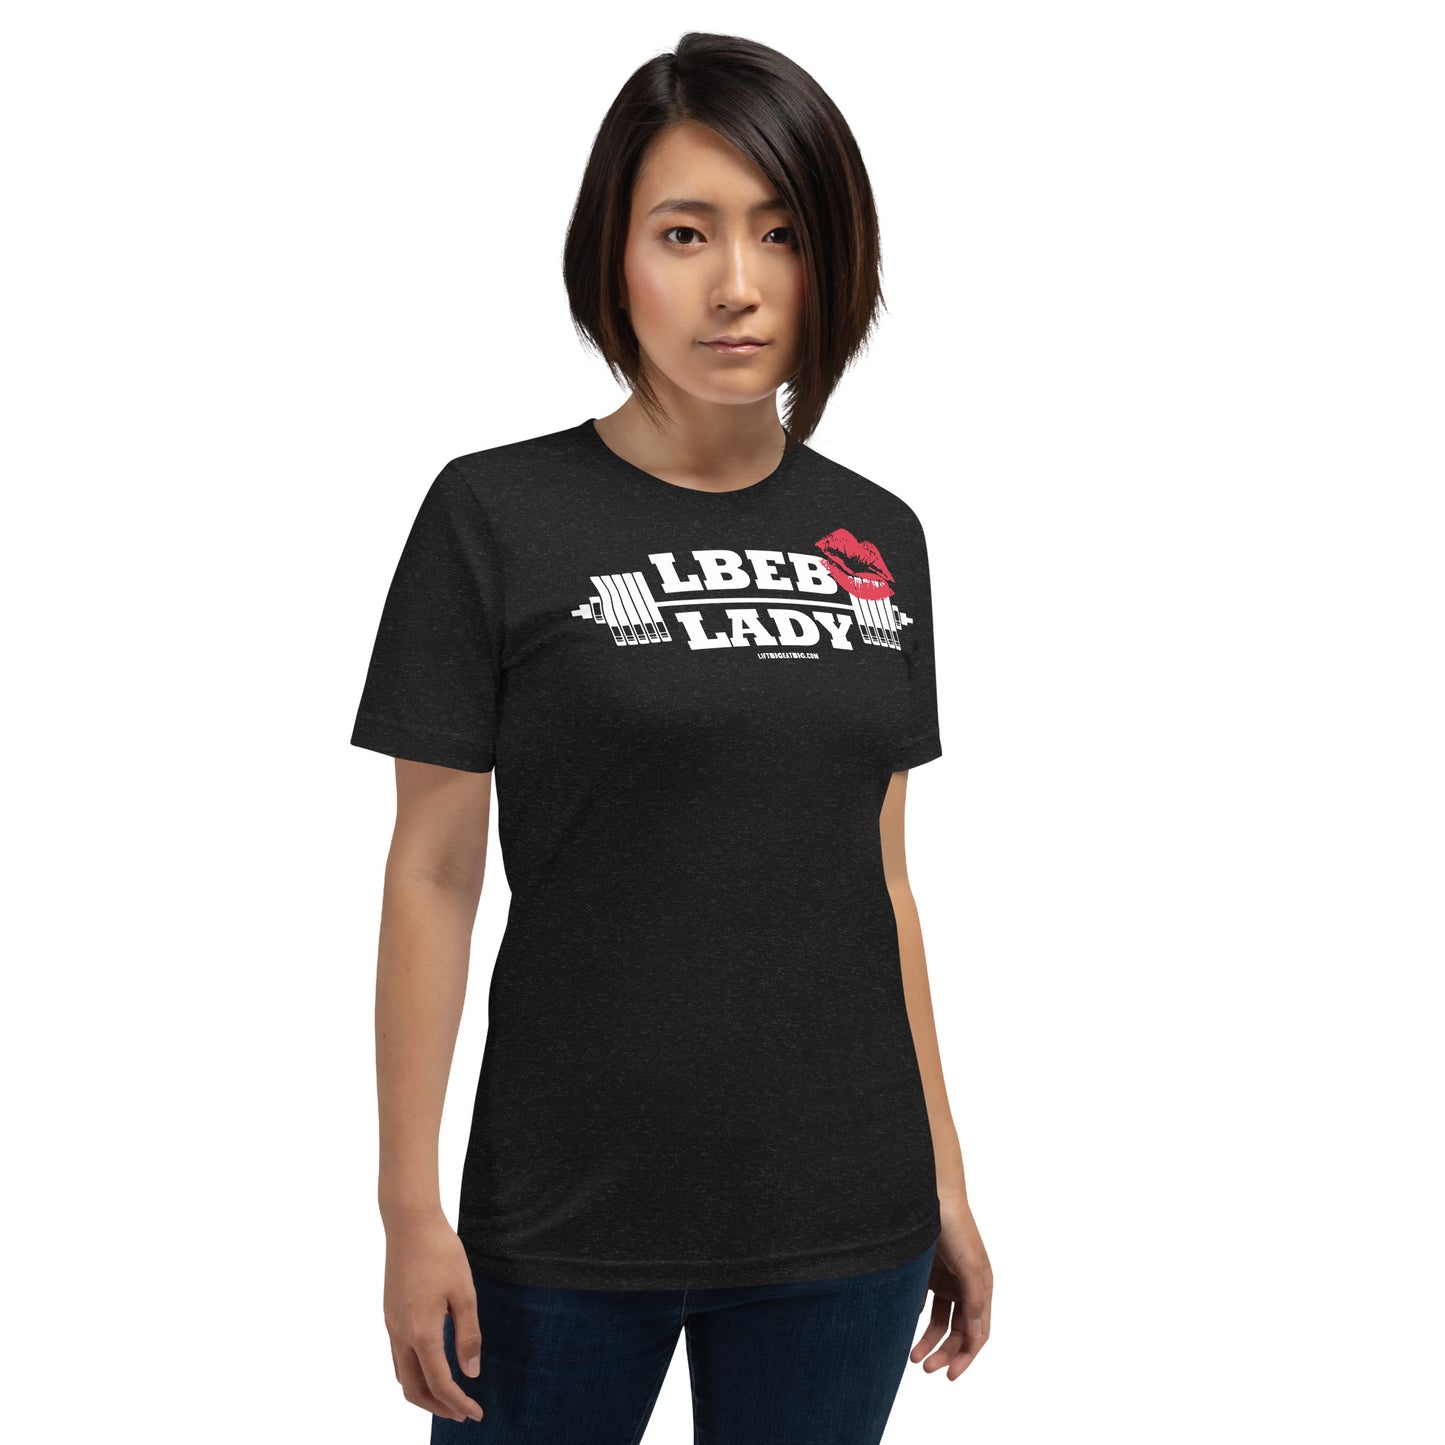 LBEB Lady Women's T-shirt